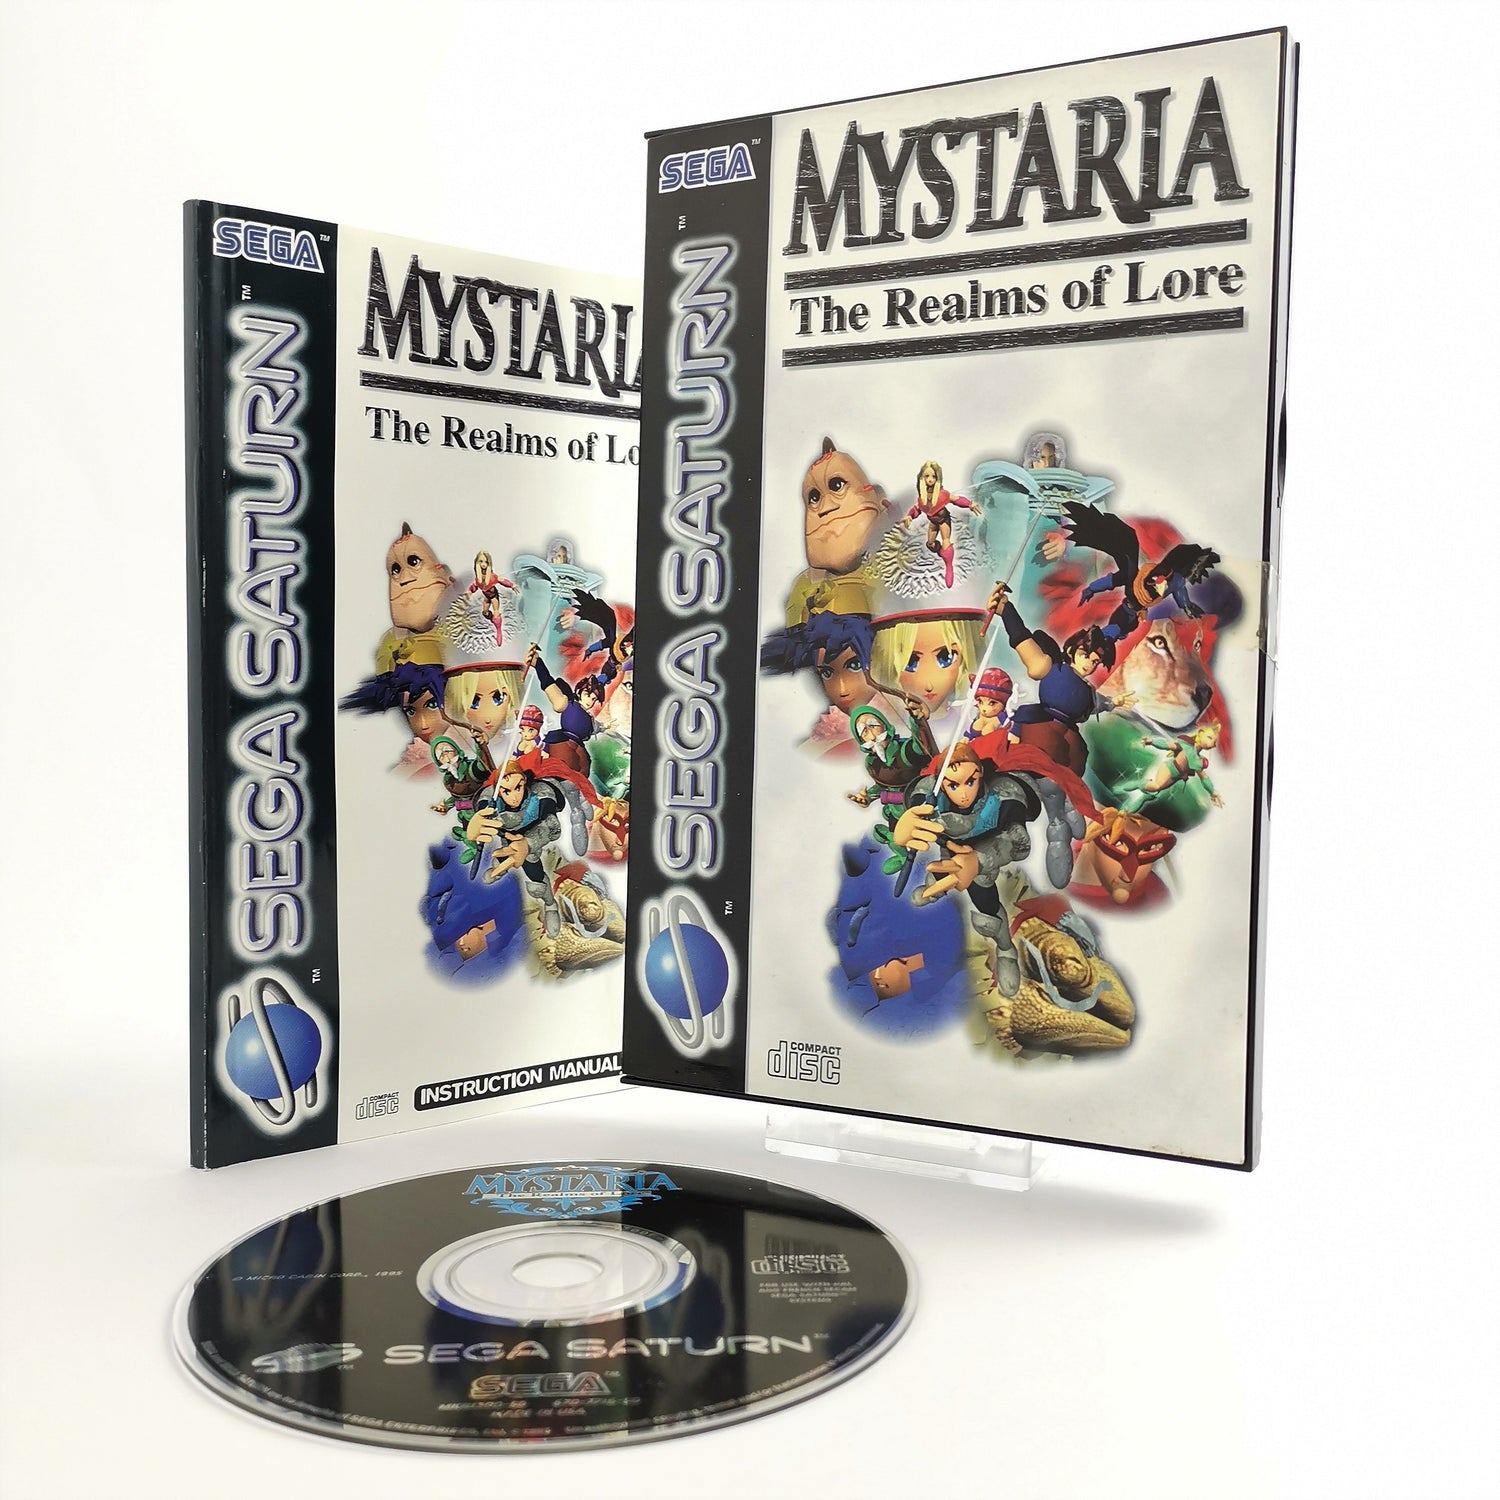 Sega Saturn Game: Mystaria The Realms of Lore - Original Packaging & Instructions | PAL version